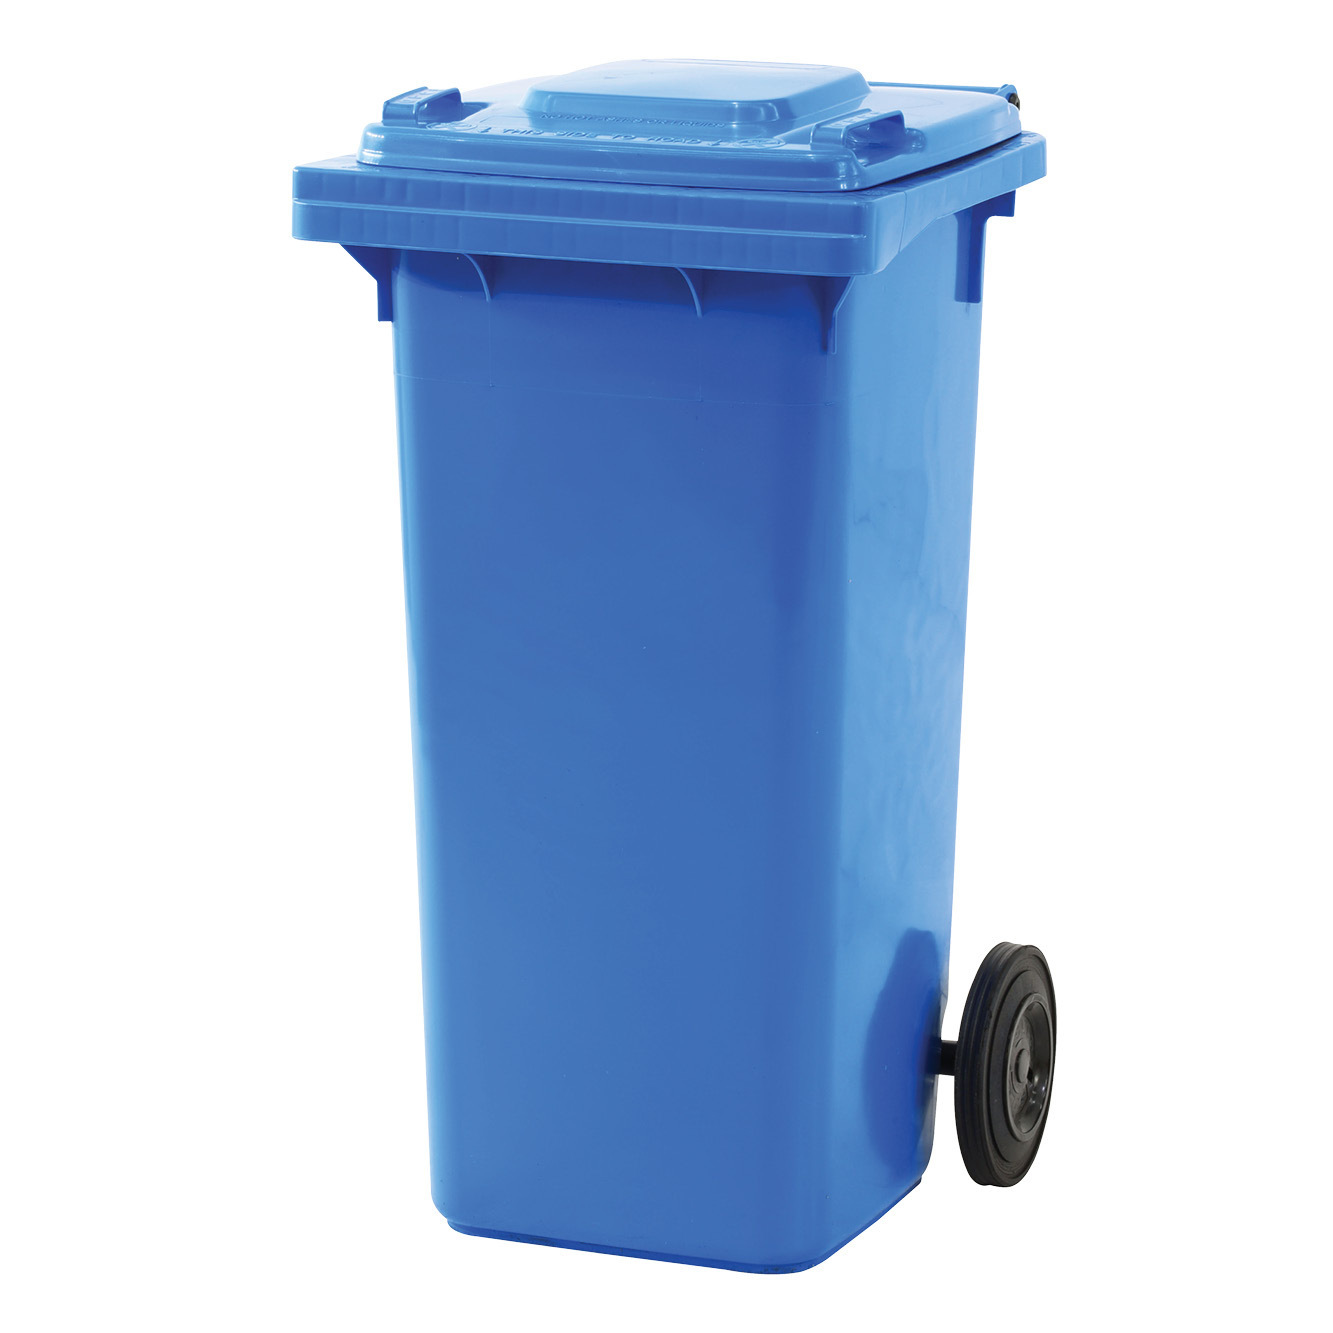 Plastic Wheelie Bin 120 Litre- Blue (480x550x940mm - WxDxH)